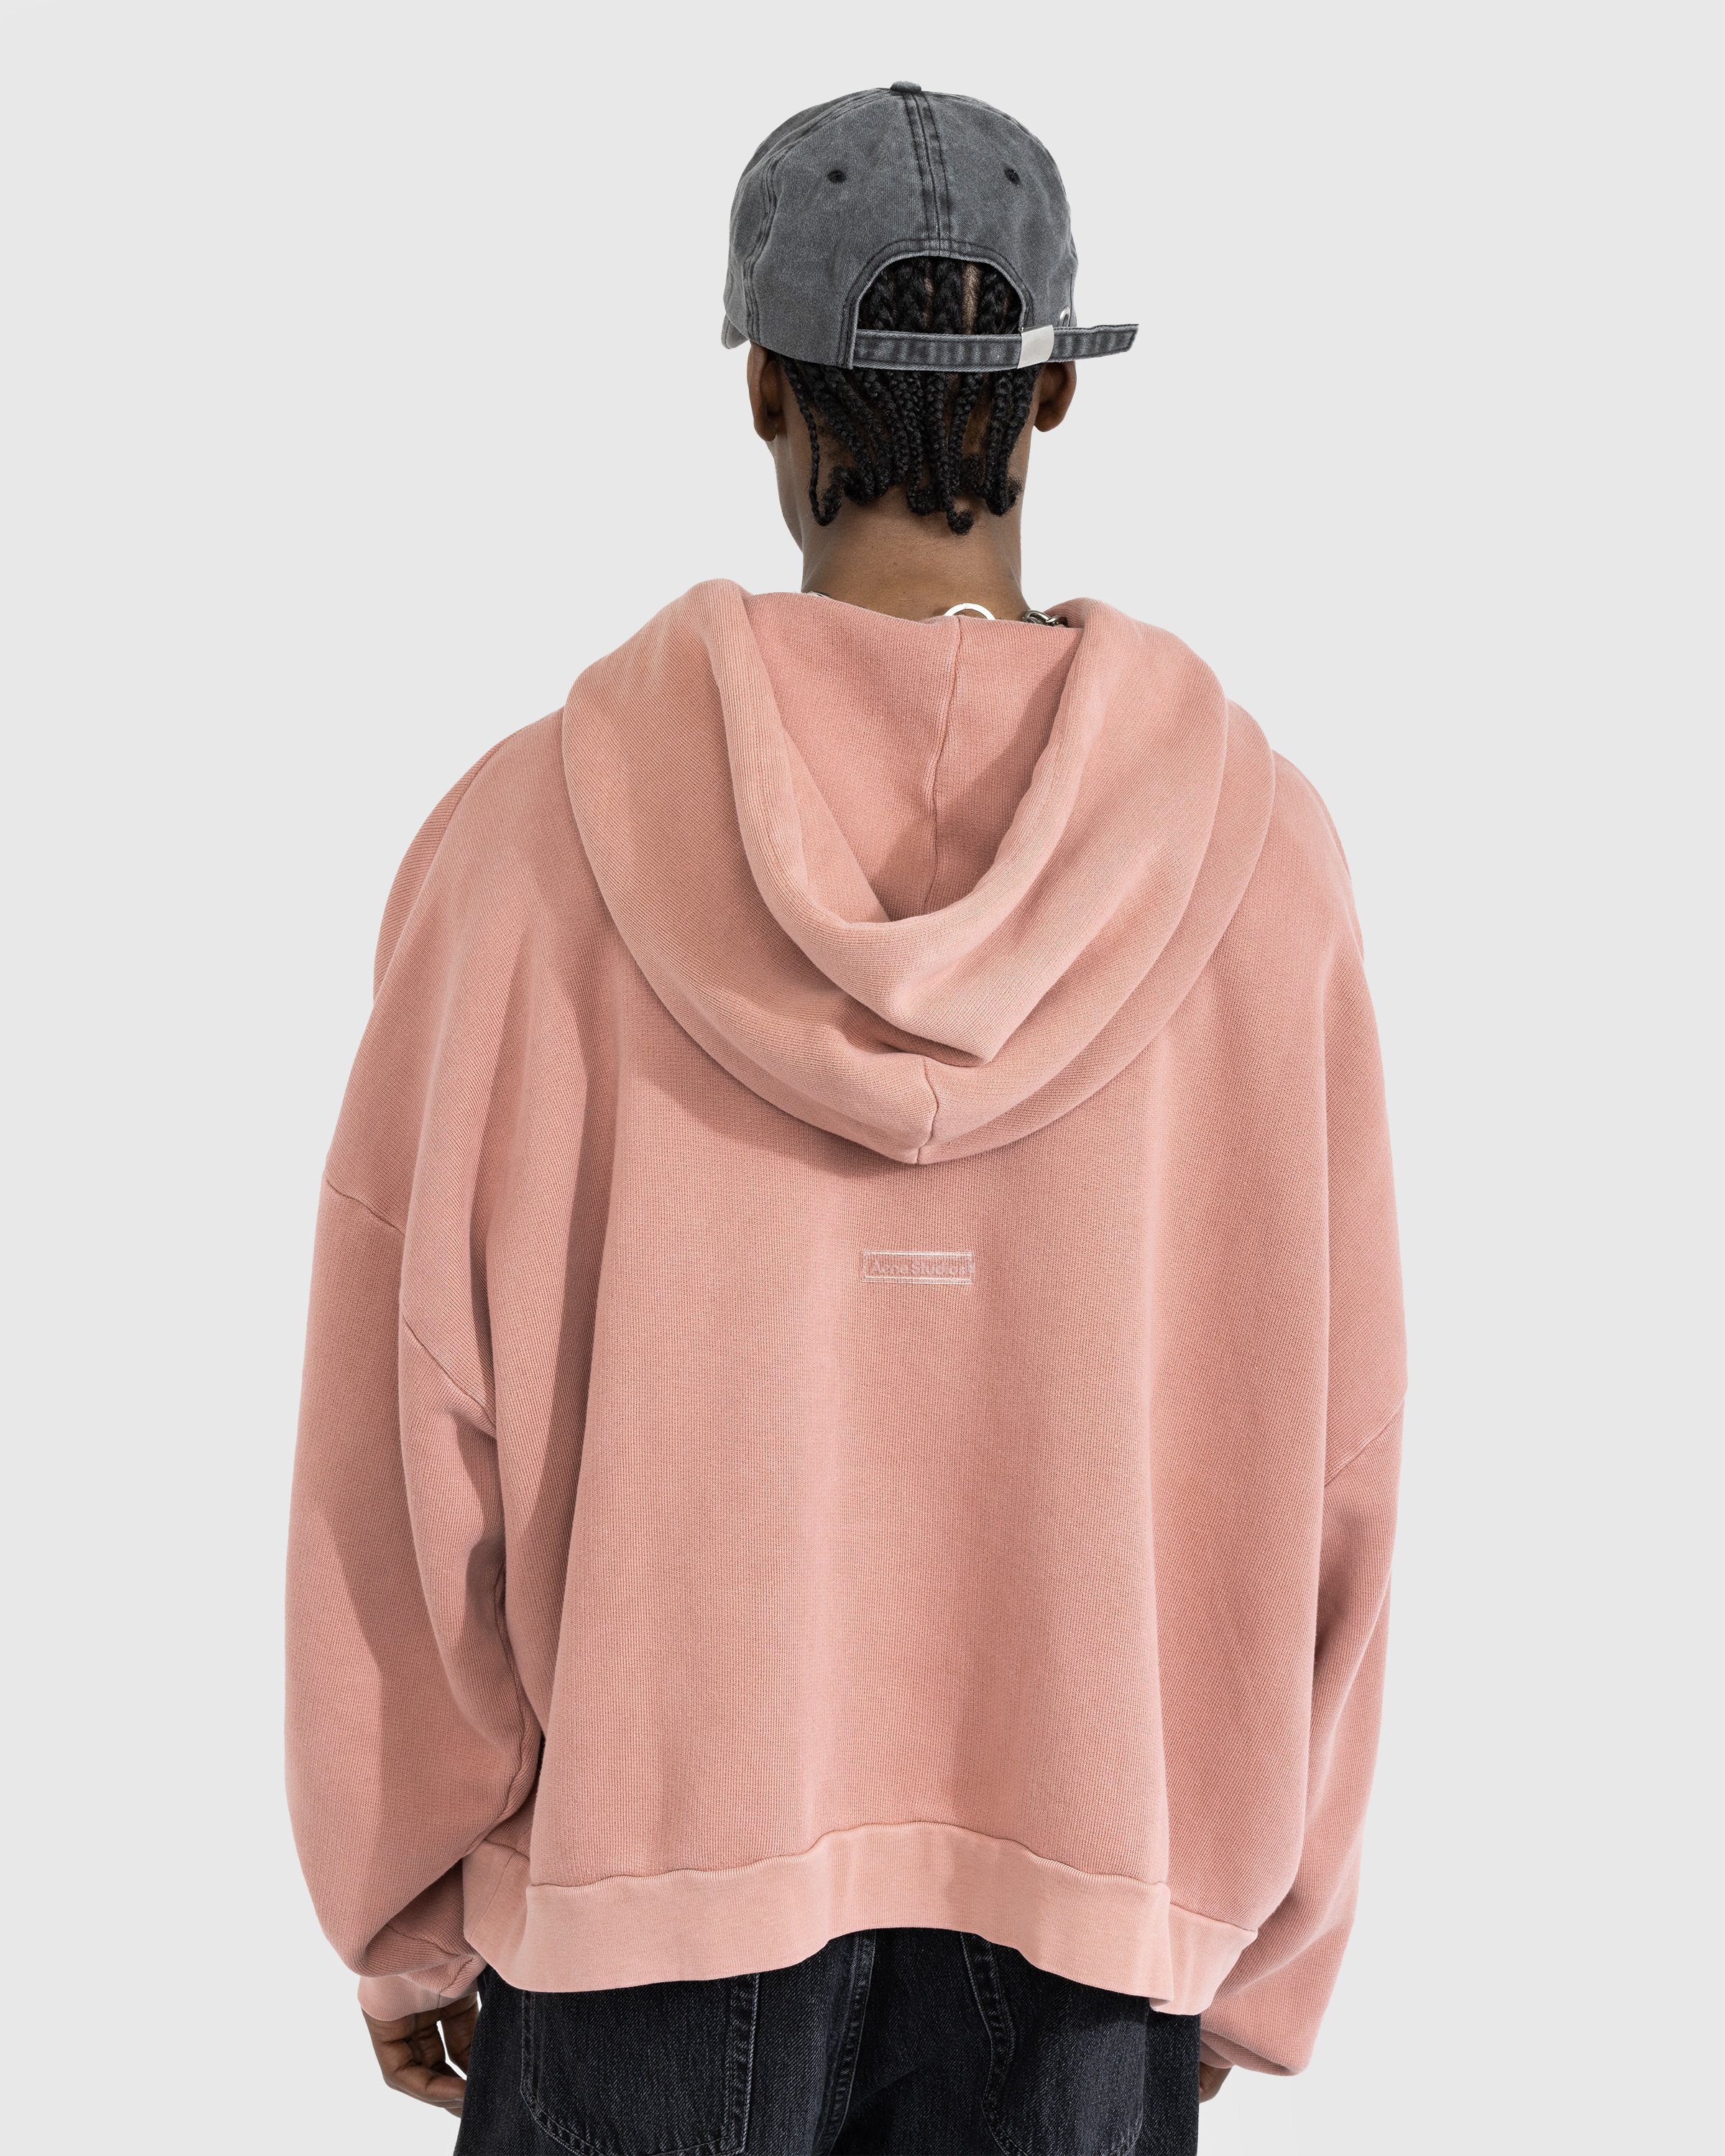 Acne Studios - FN-UX-SWEA000019 - Clothing - Pink - Image 3